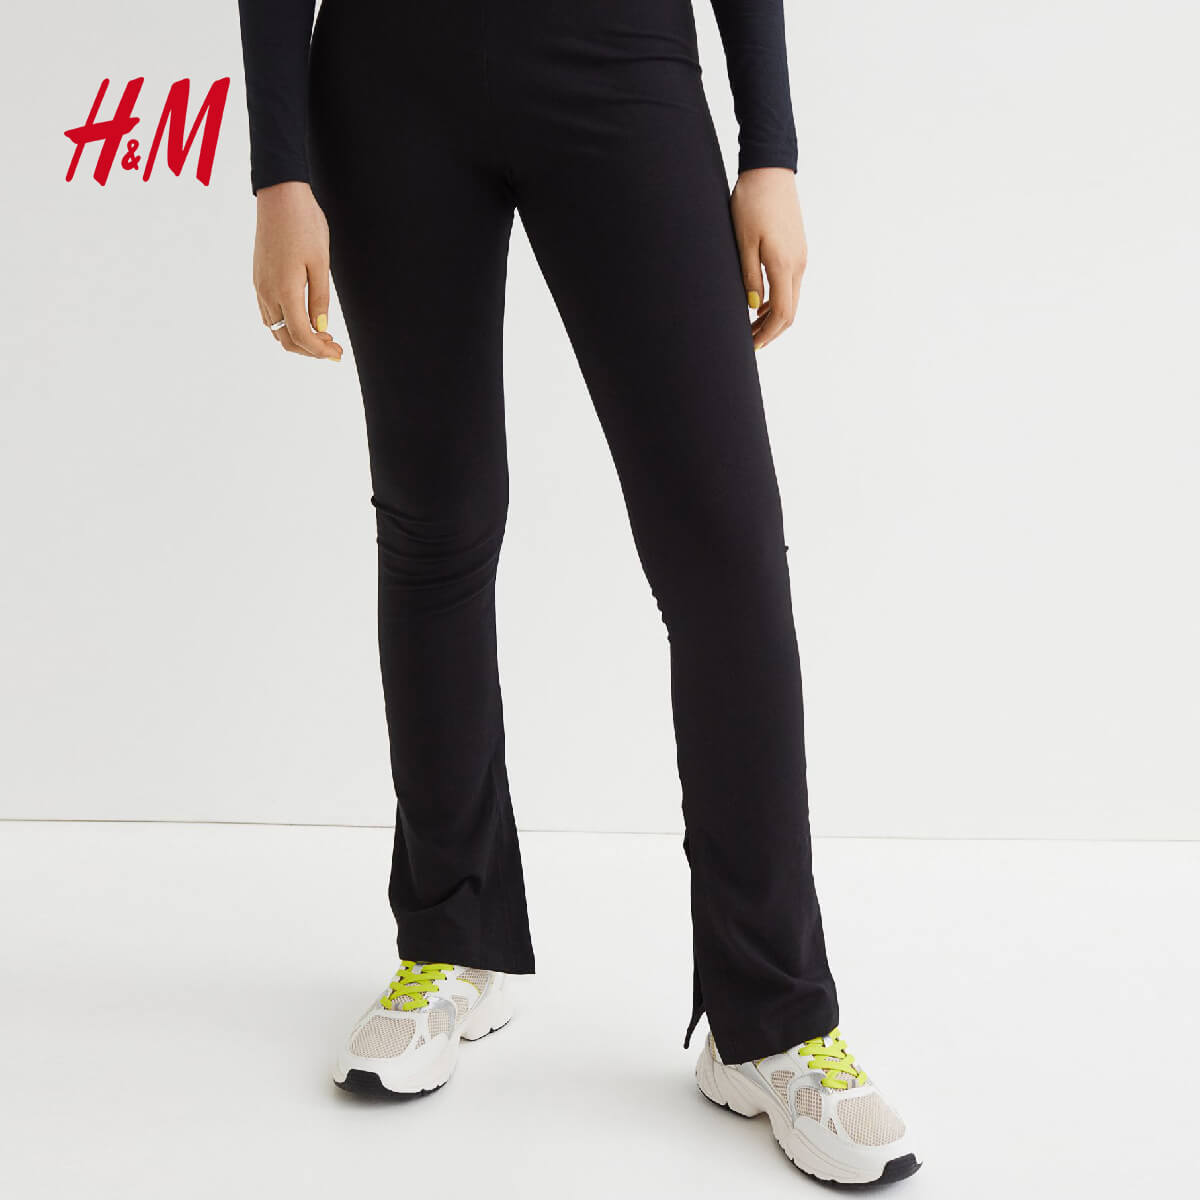 H&M BLACK COTTON FLARED SLIT LEGGING - Peekaboo